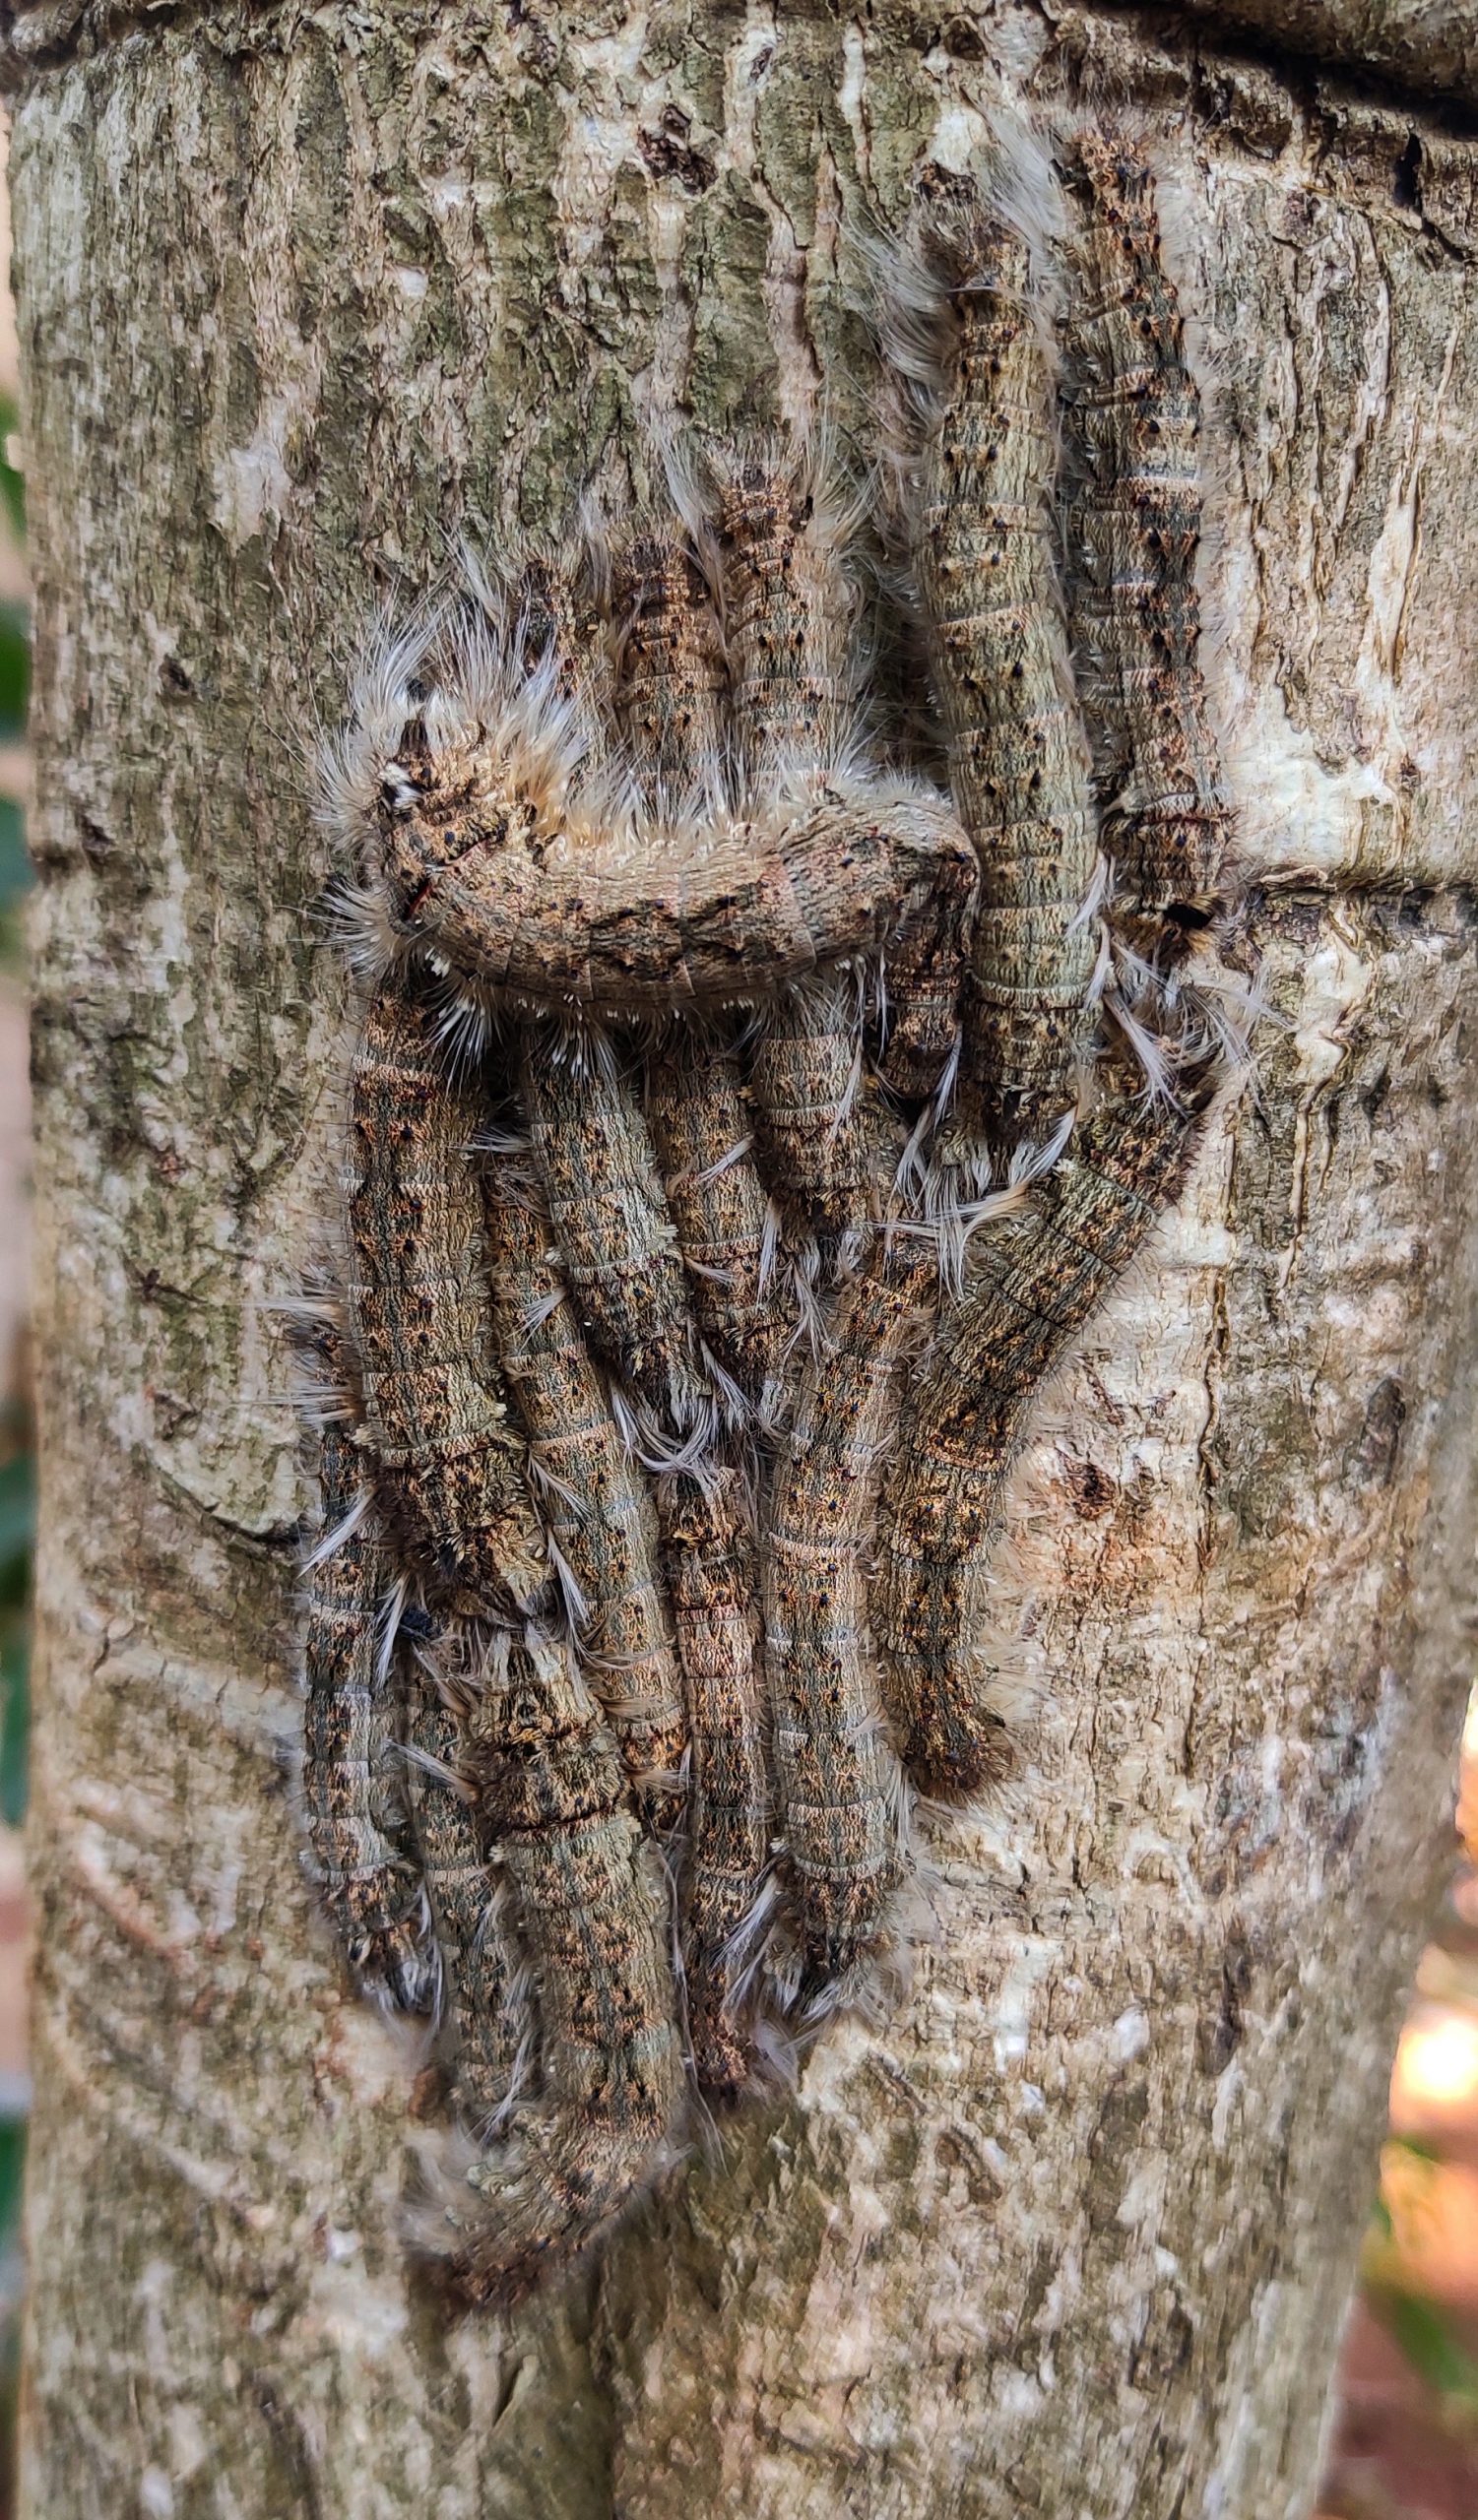 Group of caterpillars on tree trunk